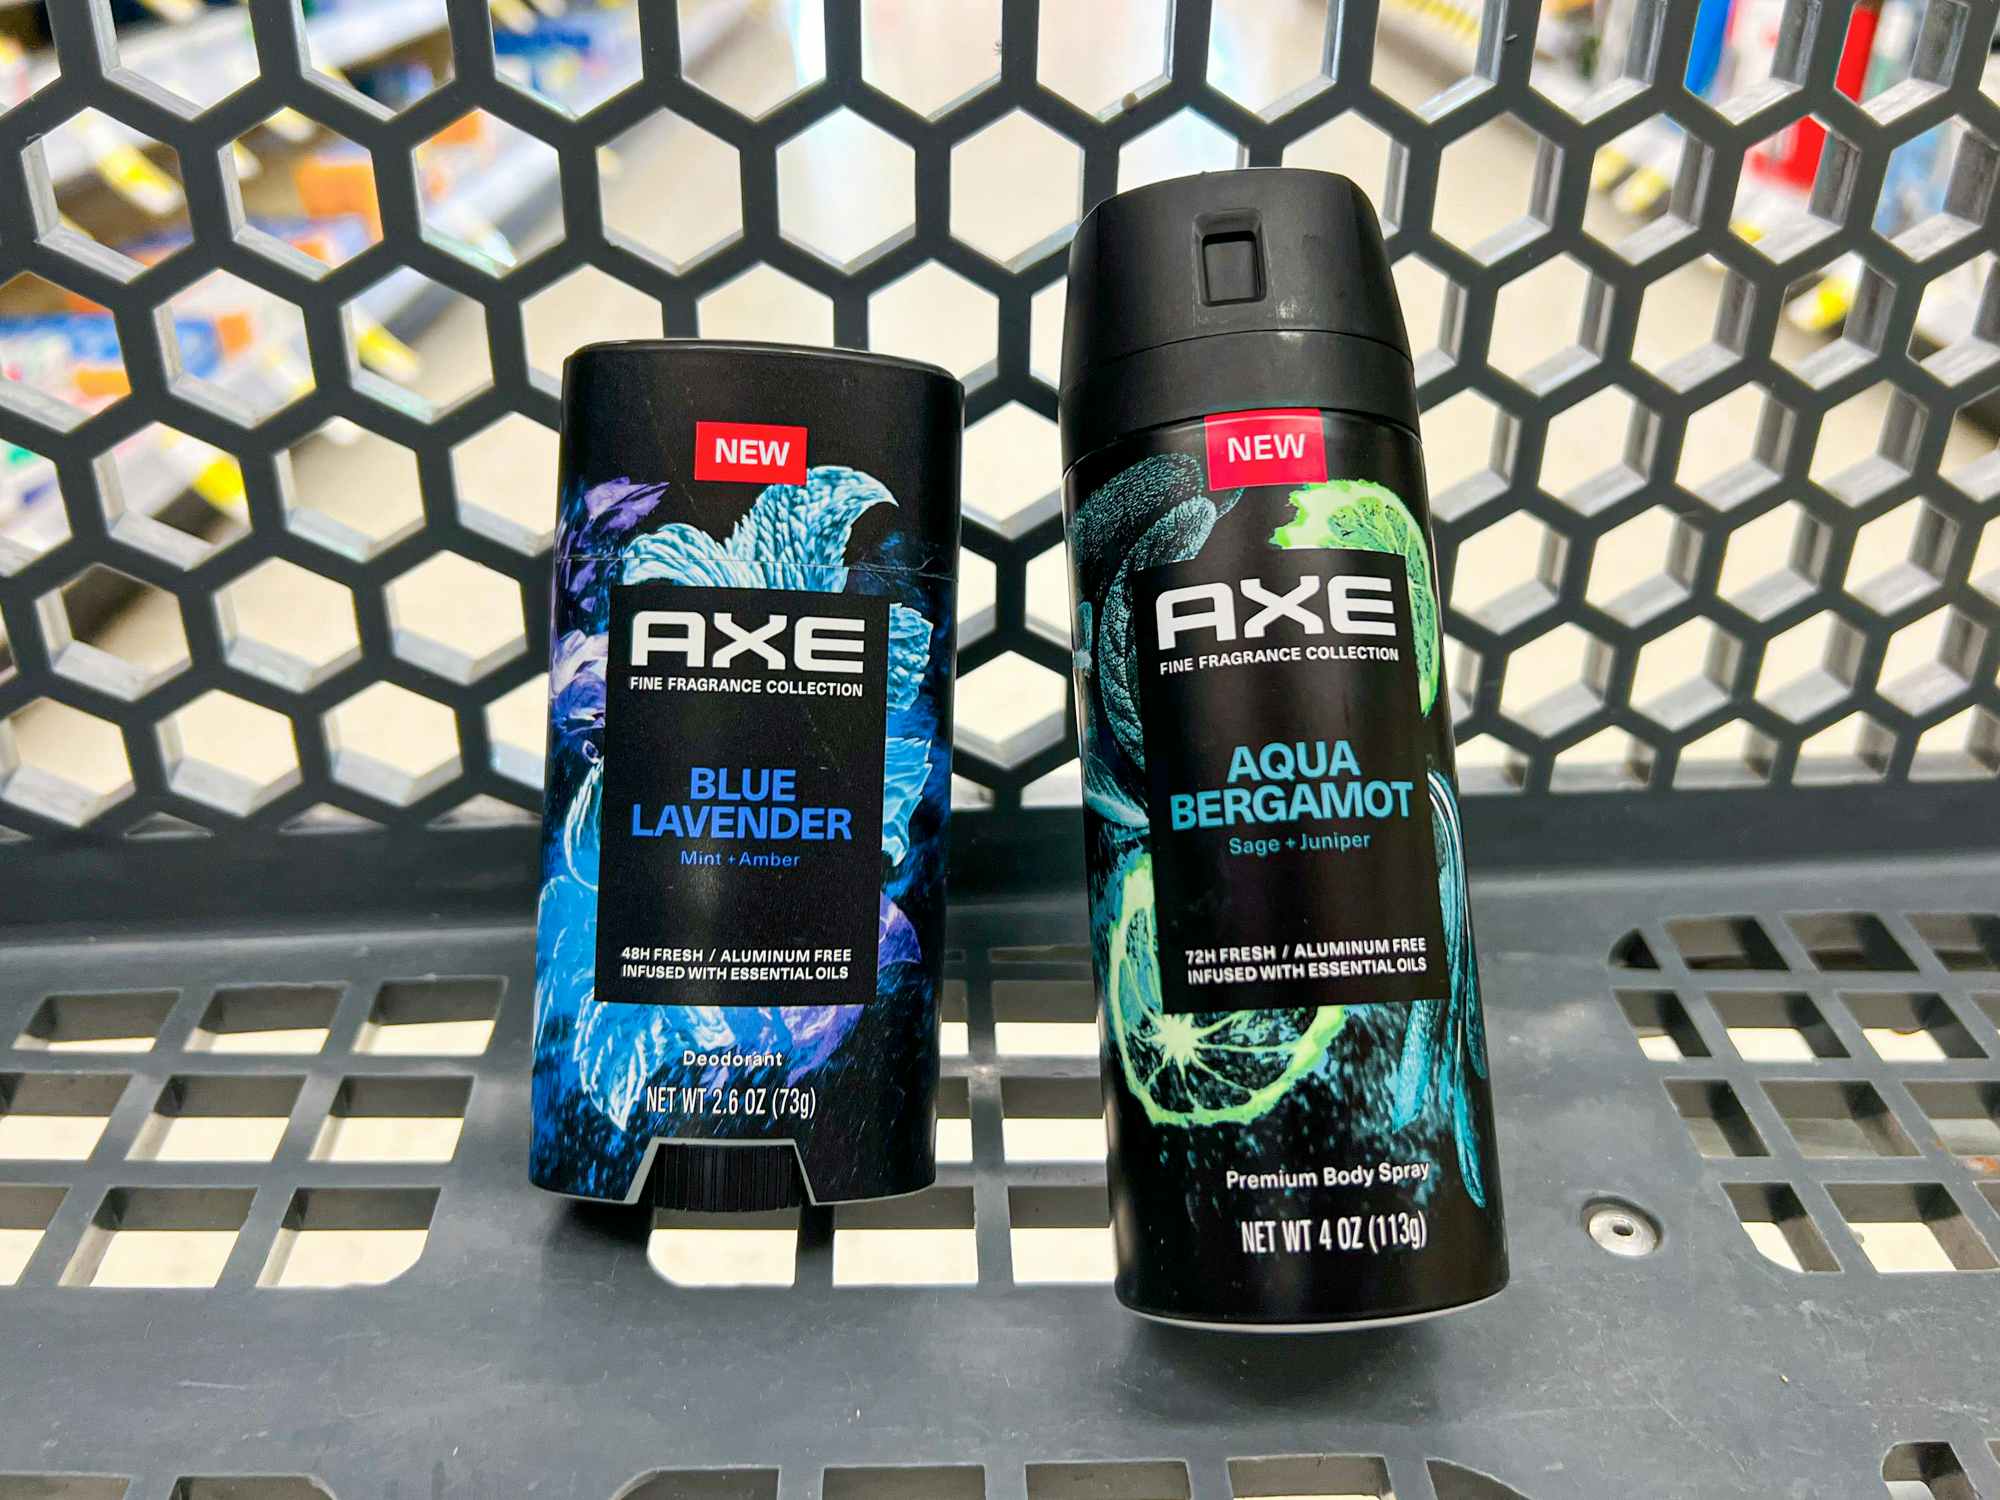 Axe Blue Lavender deodorant stick and Aqua Bergamot body spray in a Walgreens cart